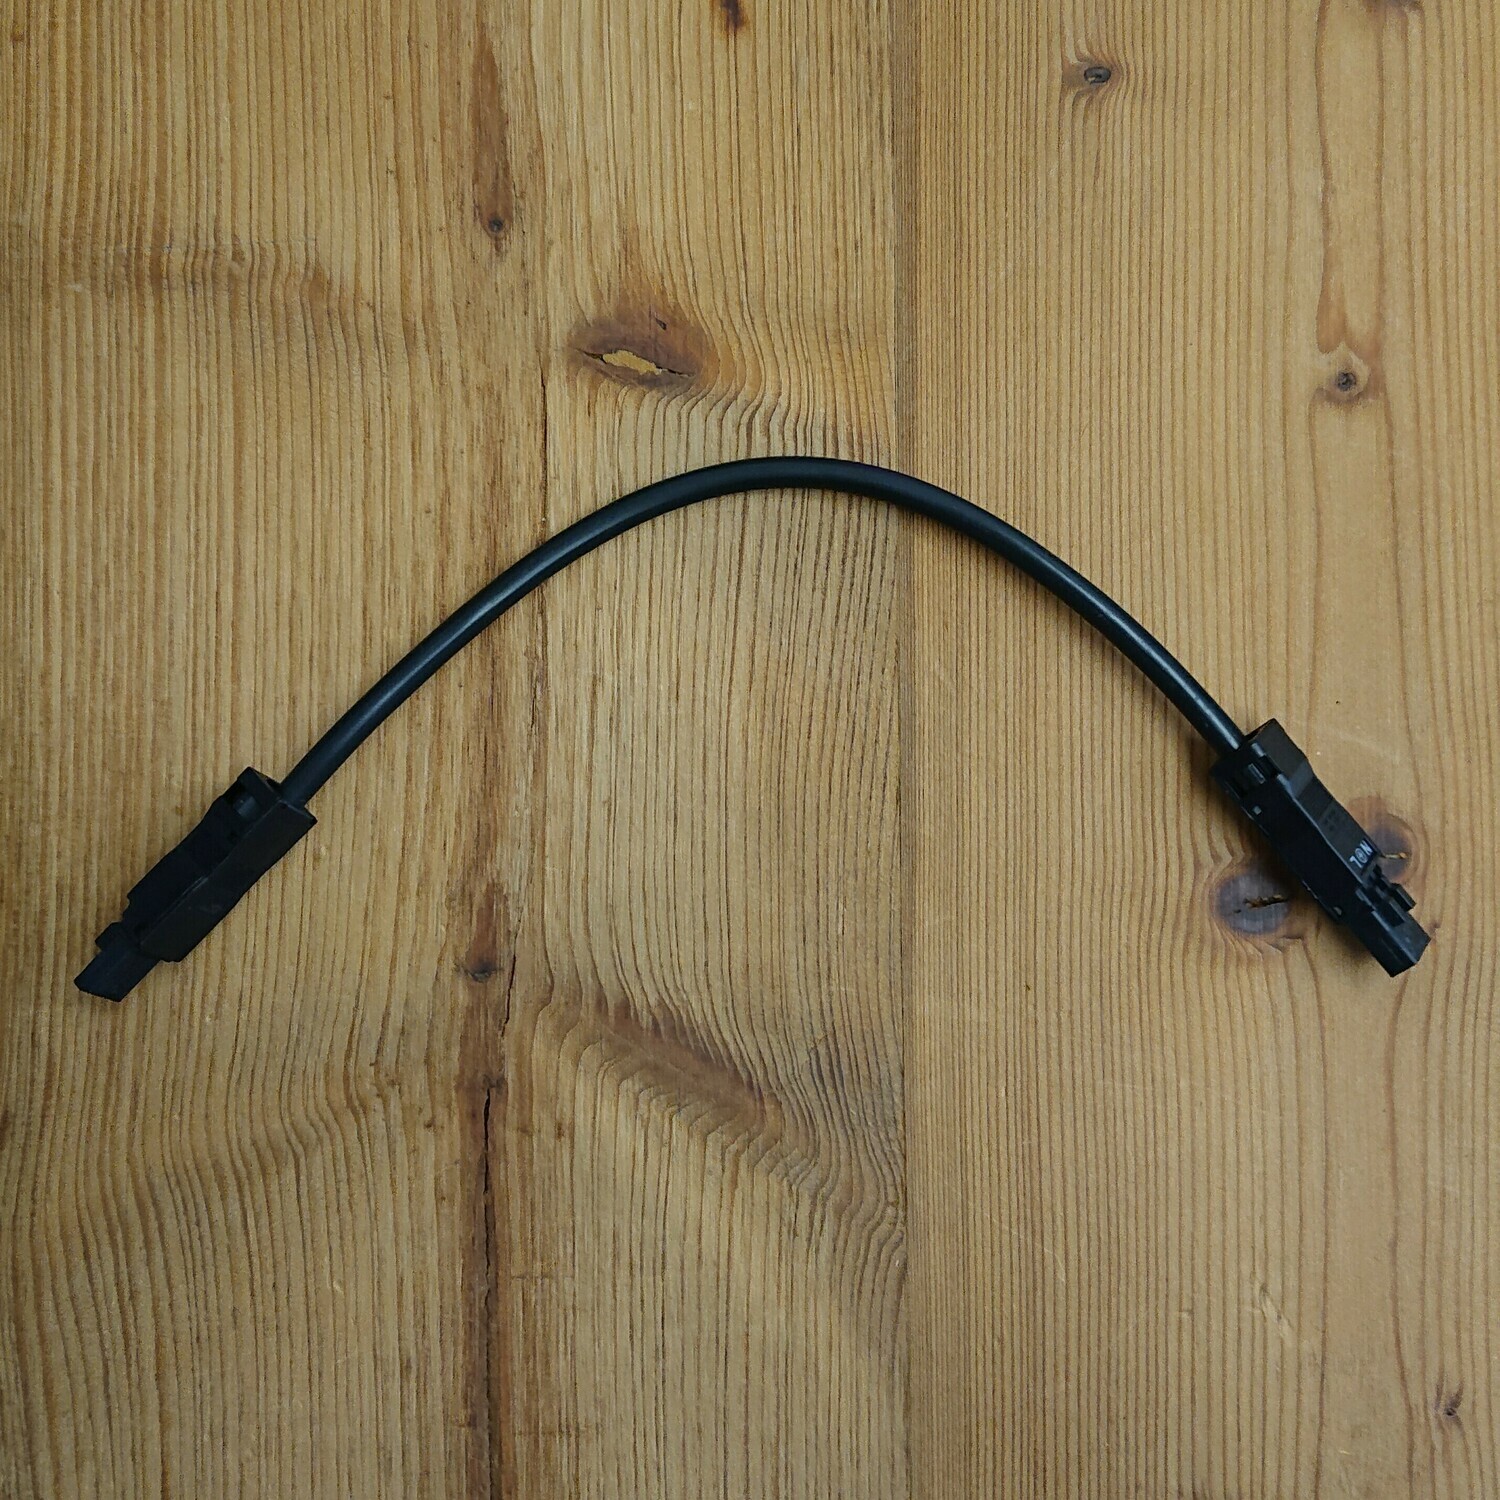 Sanlight Q6W & Q4W connection cable